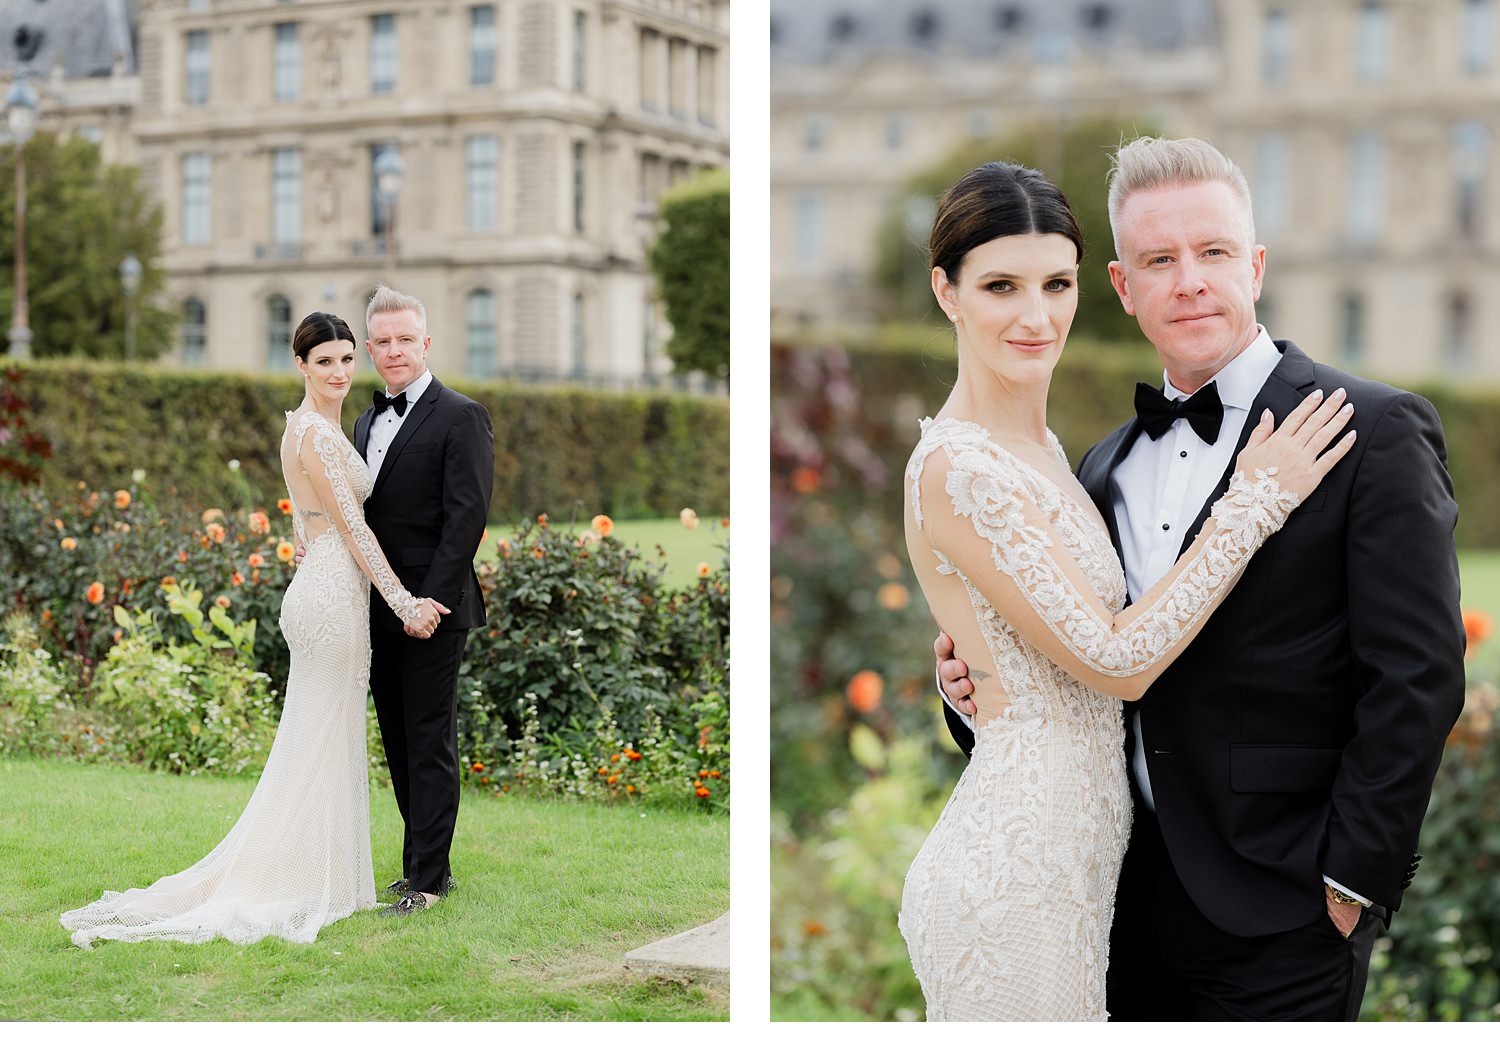 Bride and groom Portraits at the Tuileries in Paris, Elope to Paris, Elopement,